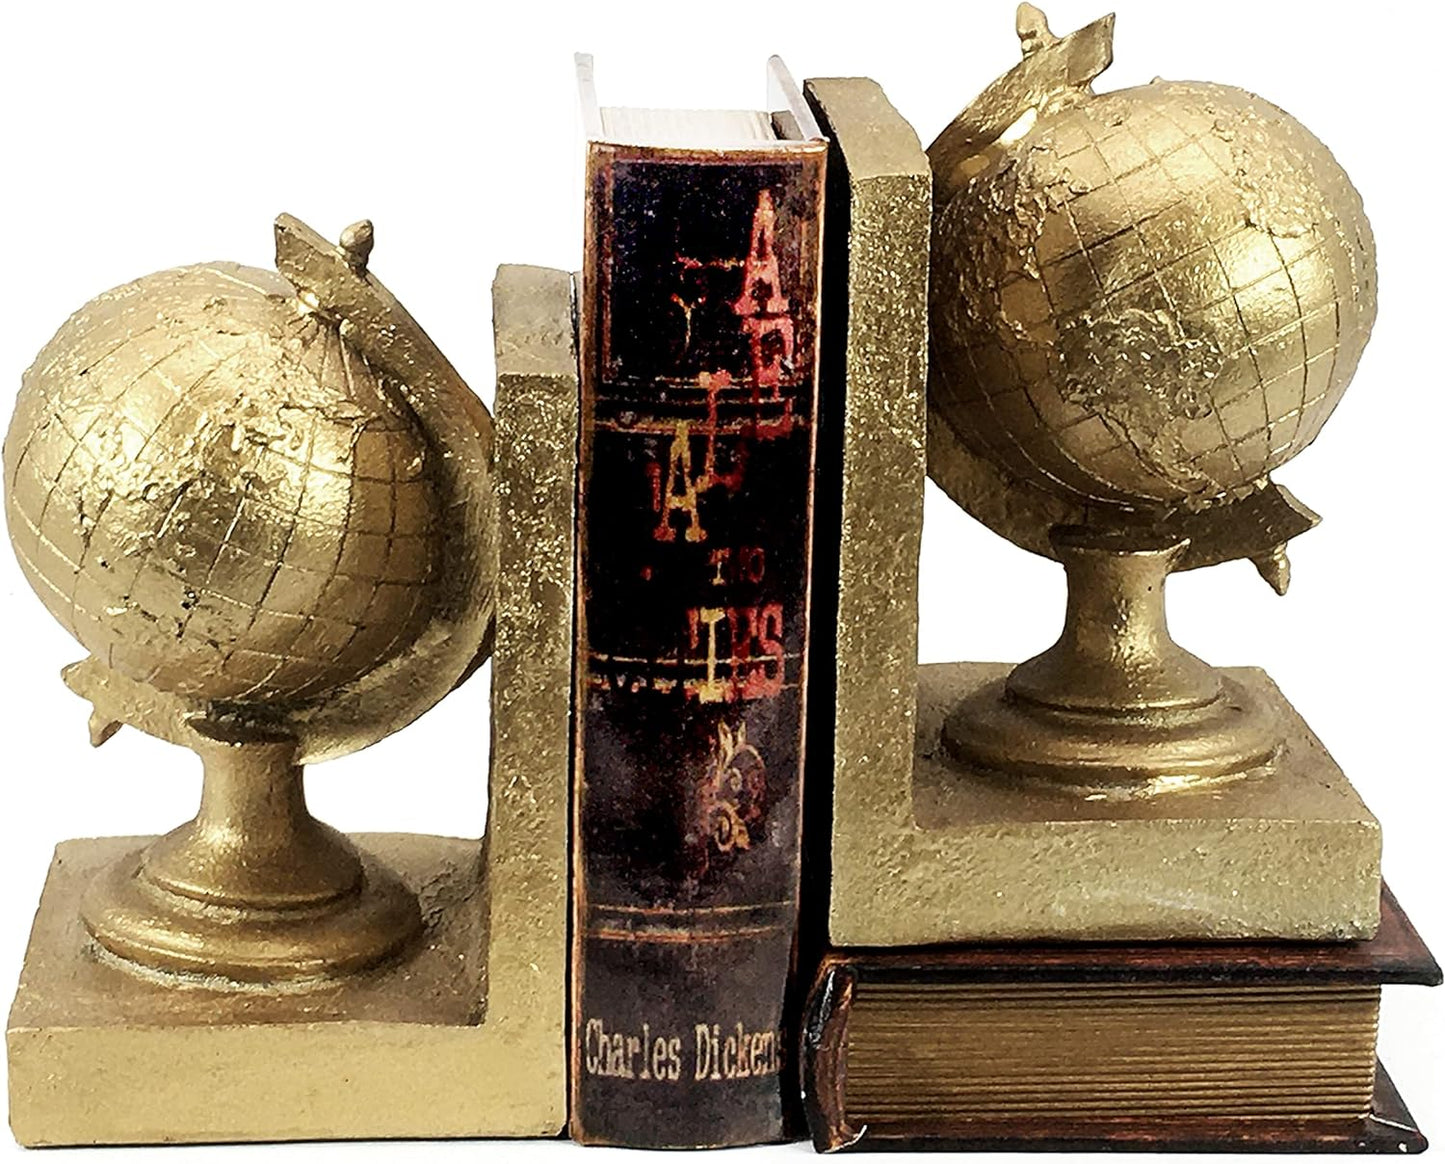 Vintage Globe Bookends Decorative Tellurion Antiques Unique Old World Map Rustic Nonskid Book Ends Desk Bookshelf Shelves Stoppers Holder Farmhouse Boho Decor Gold